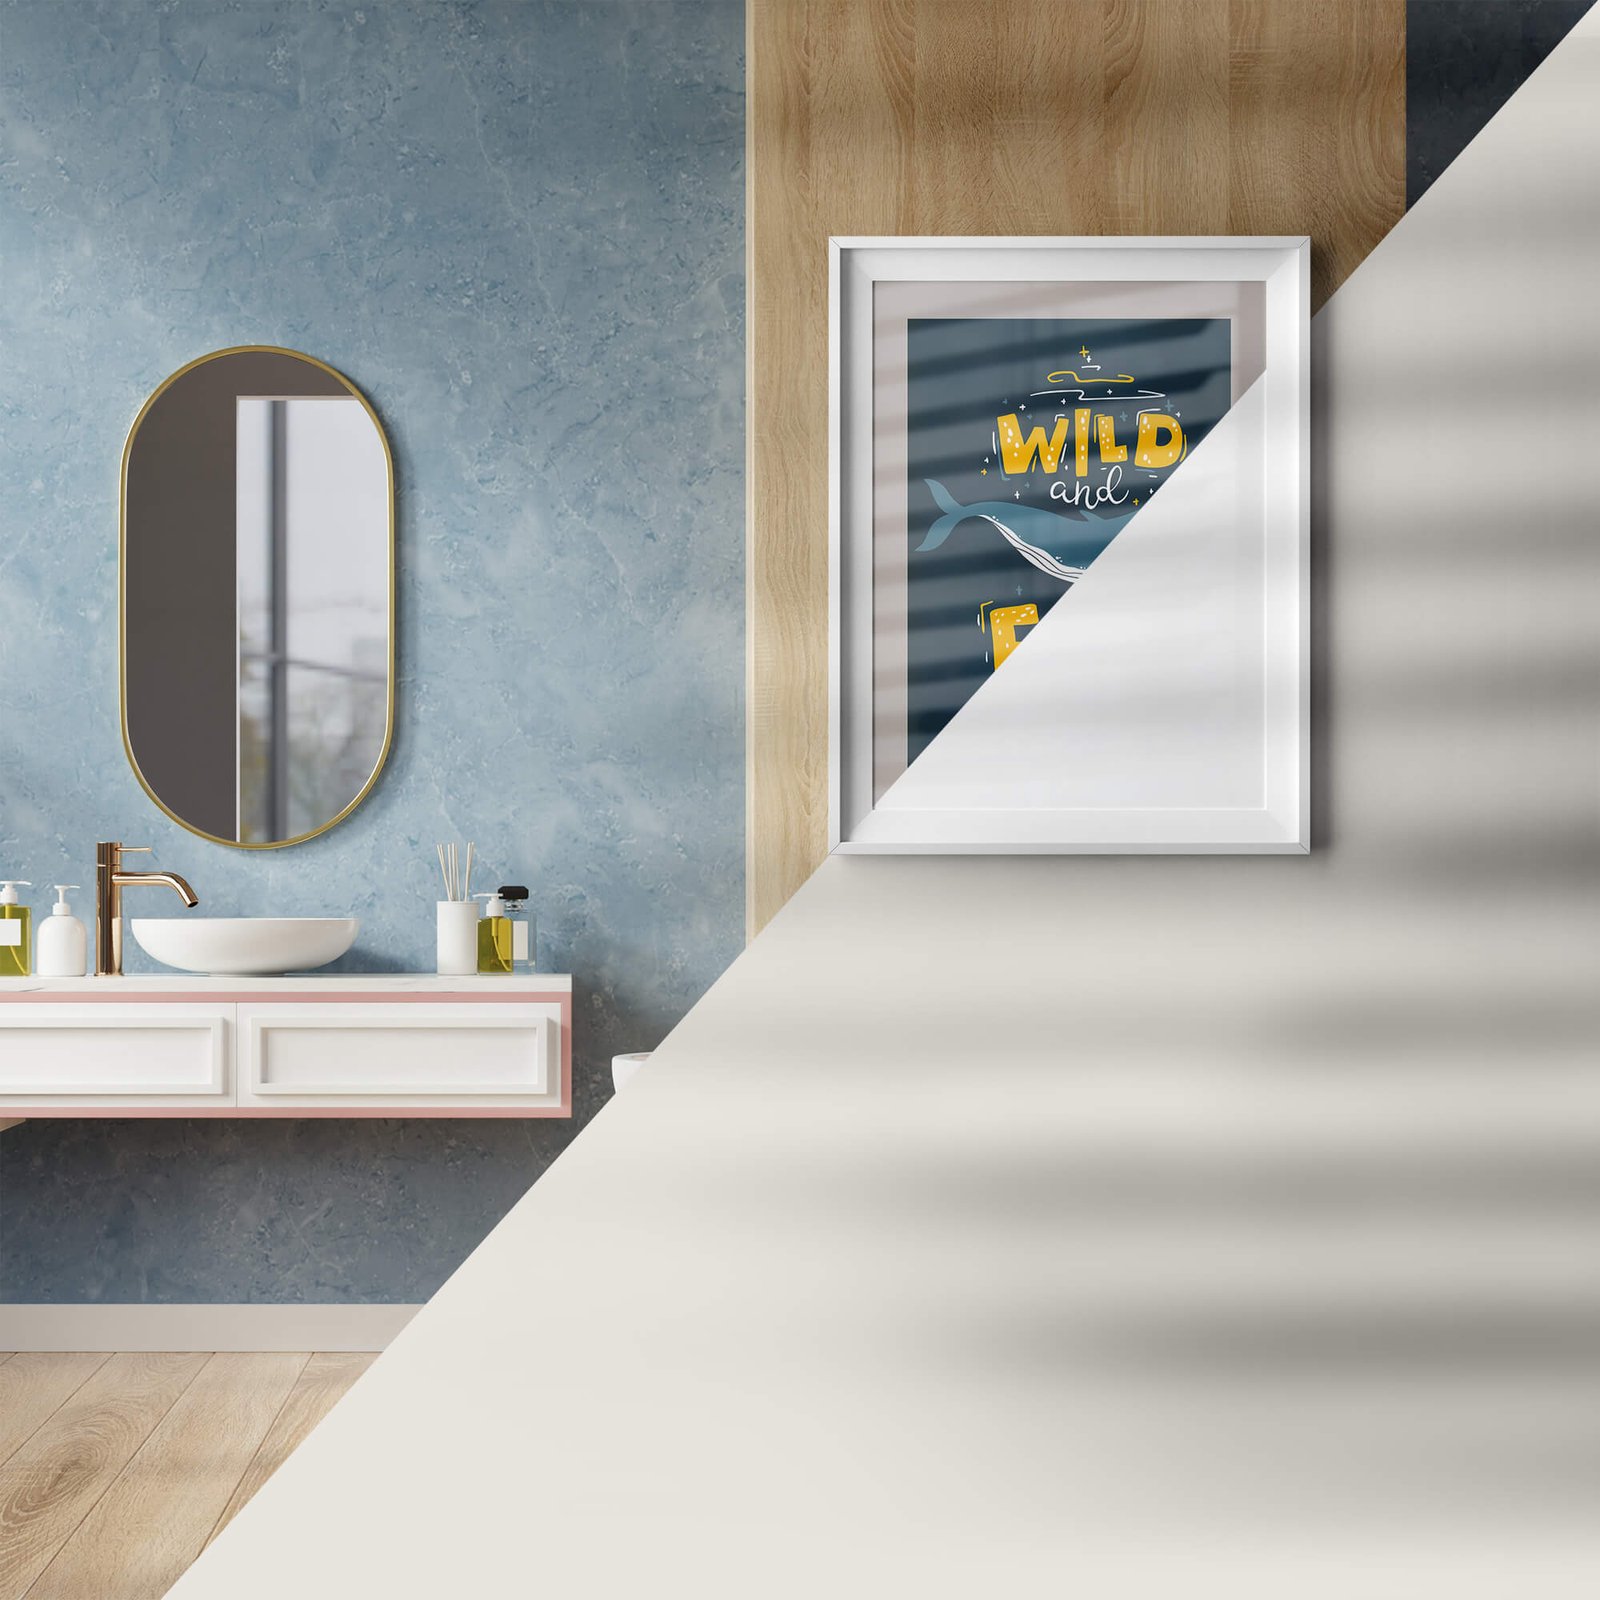 Editable Free Bathroom Frame Mockup PSD Template